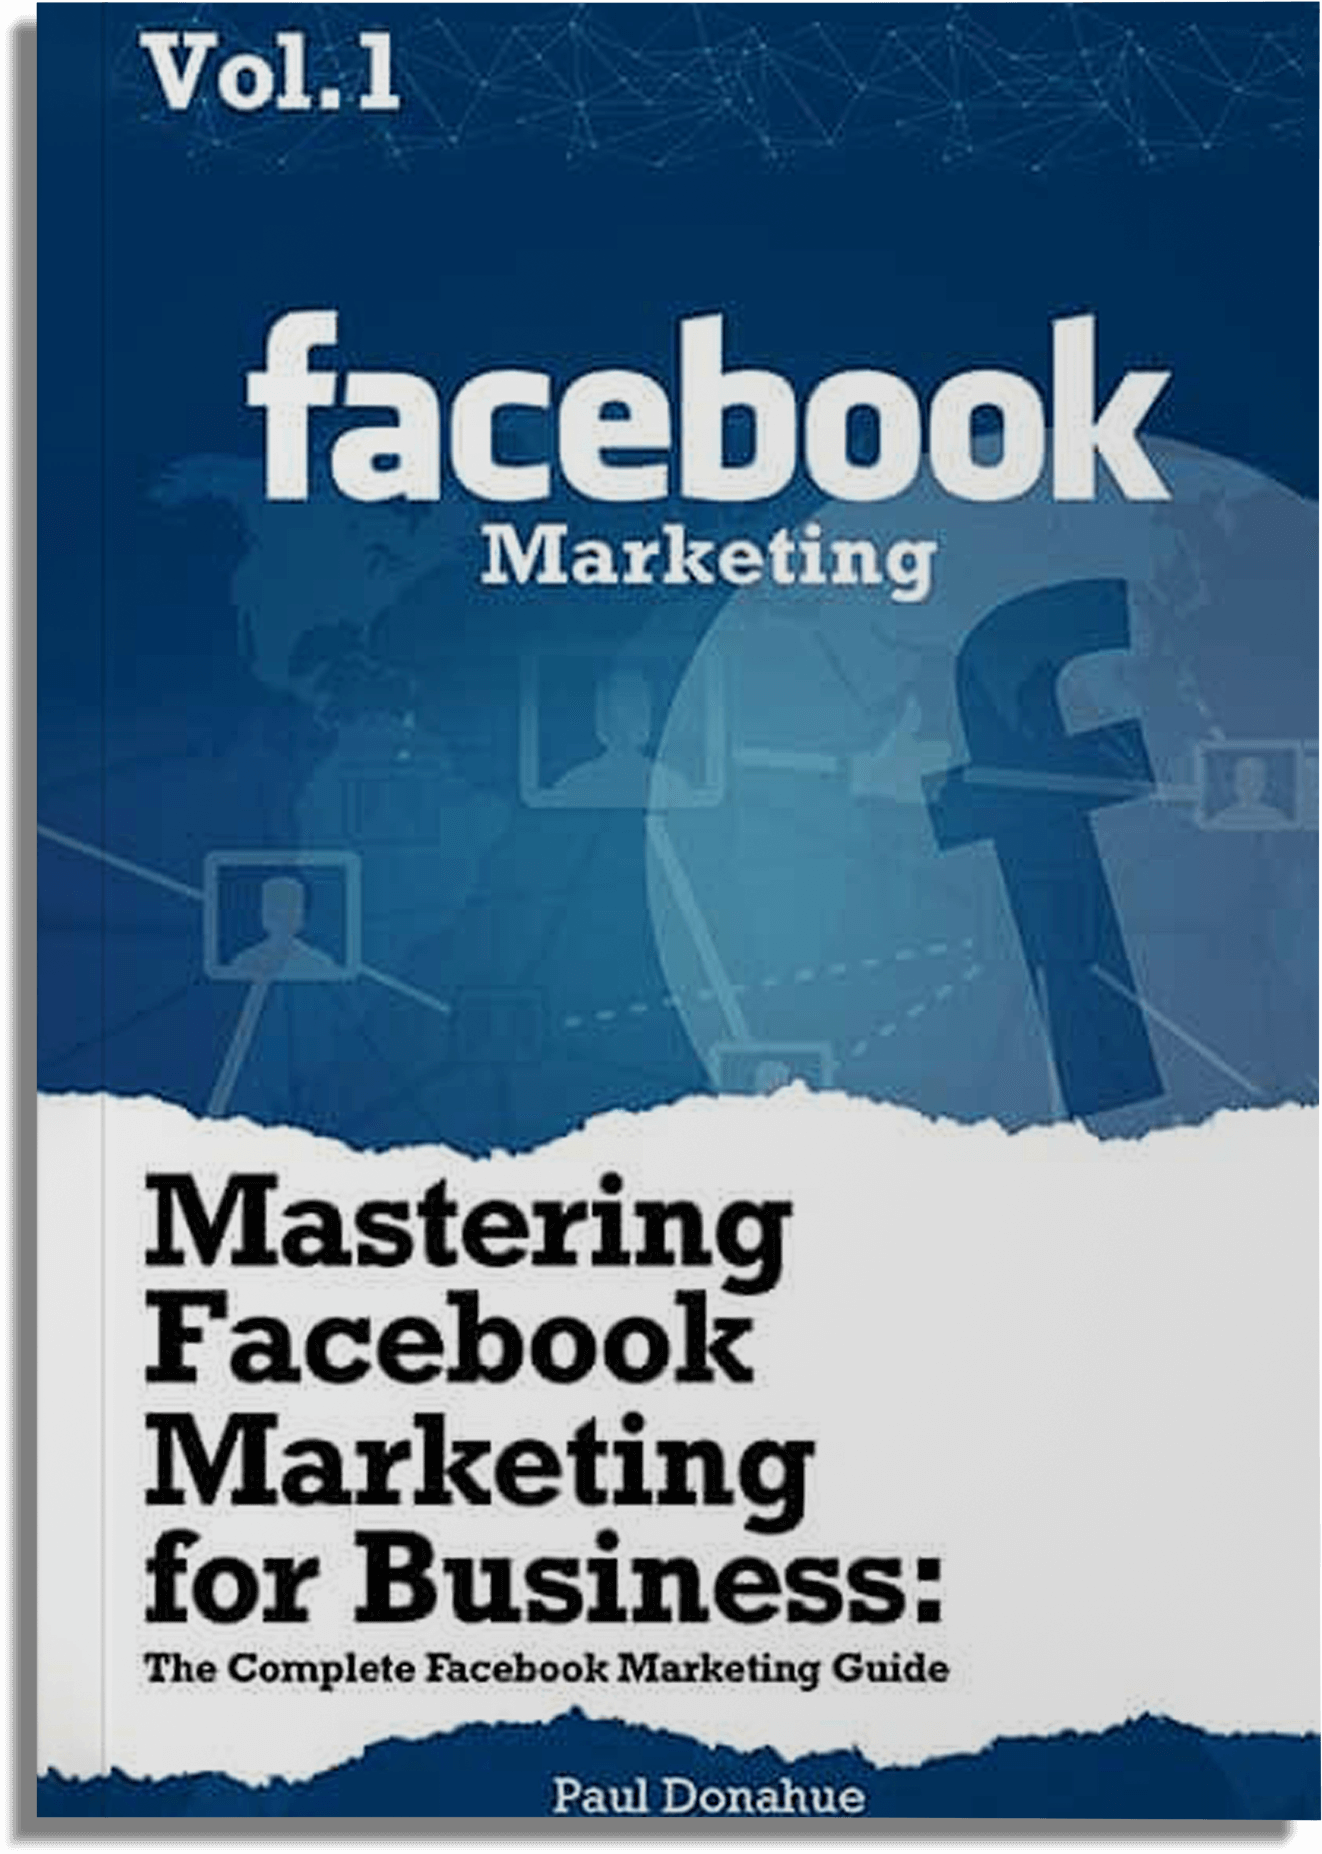 ADMS - Facebook Marketing Book Vol.1